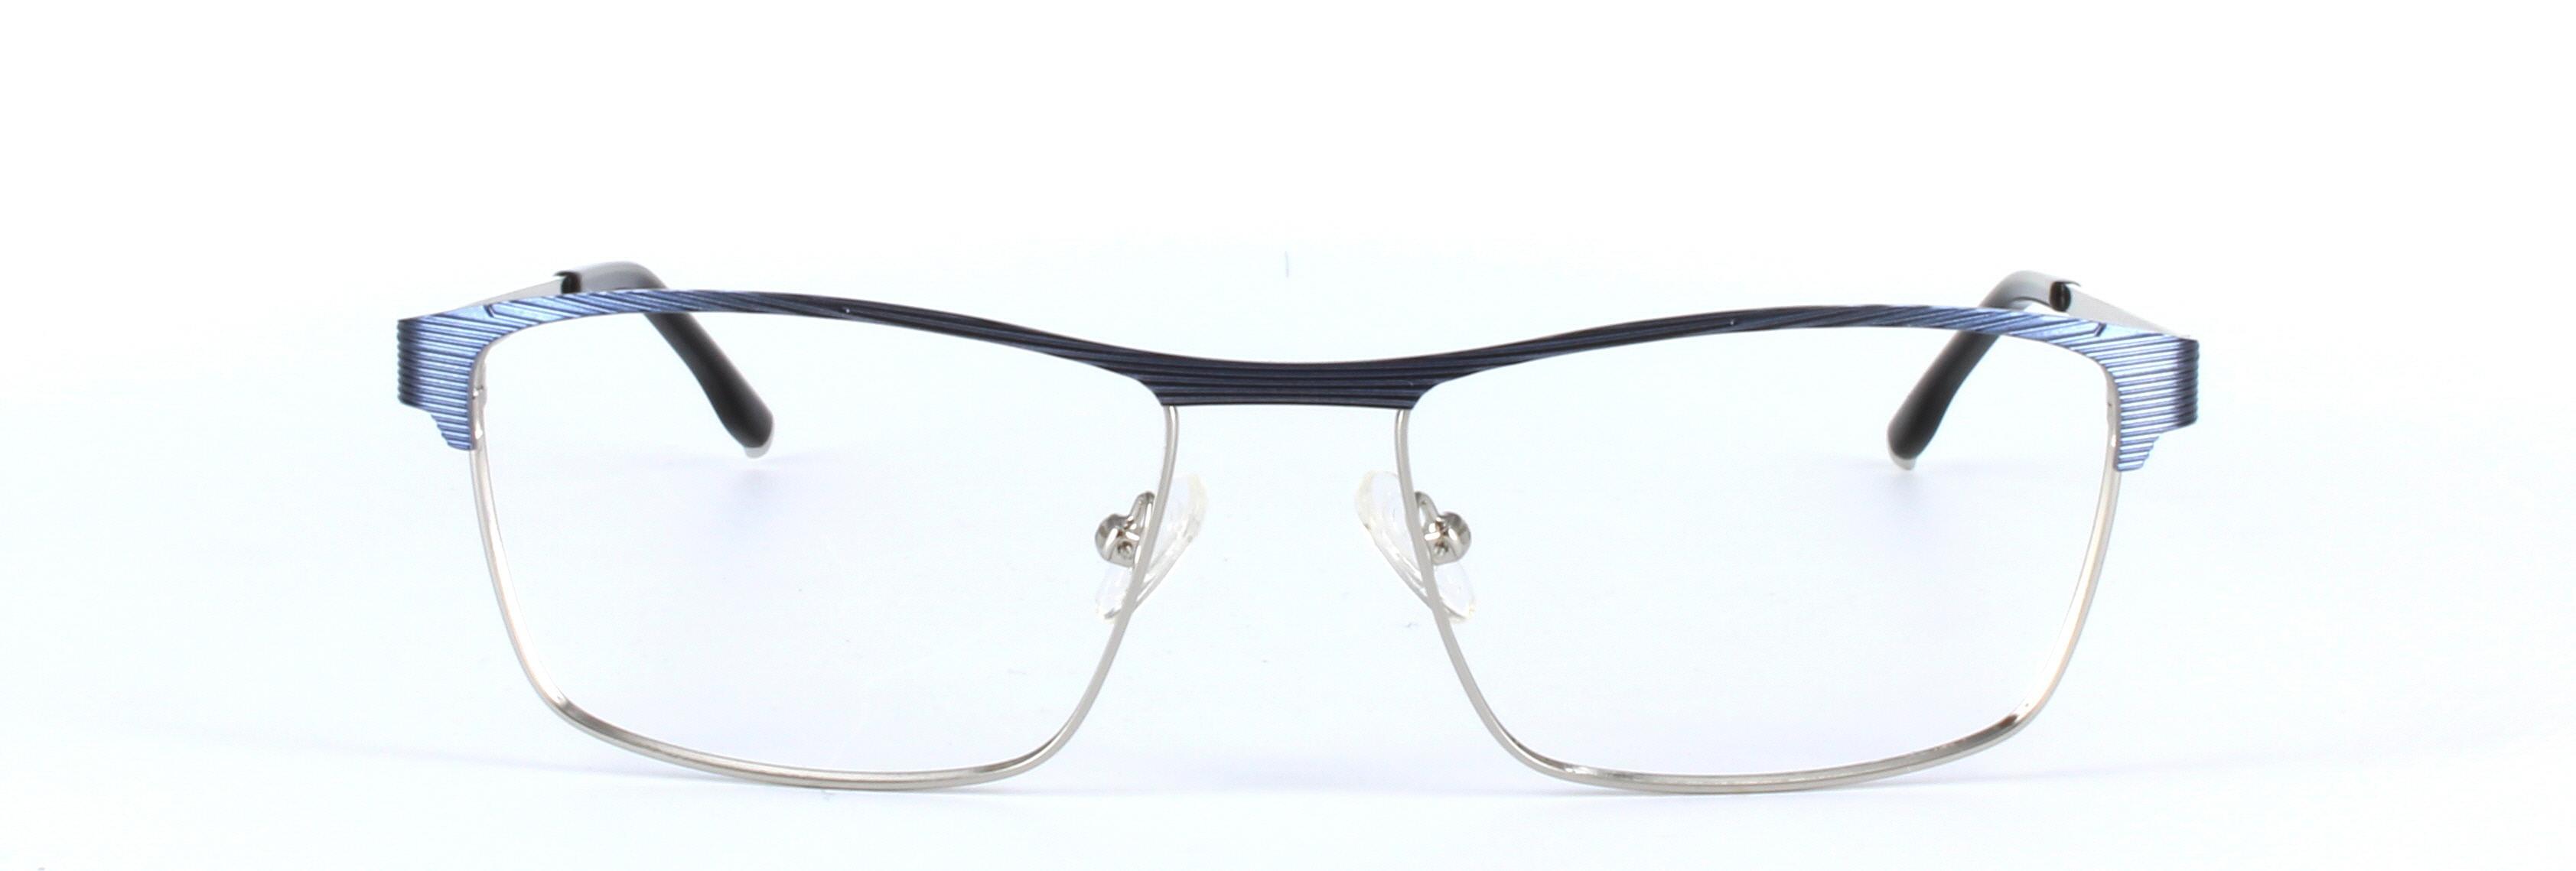 Silver Full Rim Rectangular Metal Glasses Stara Zagora - Image View 5